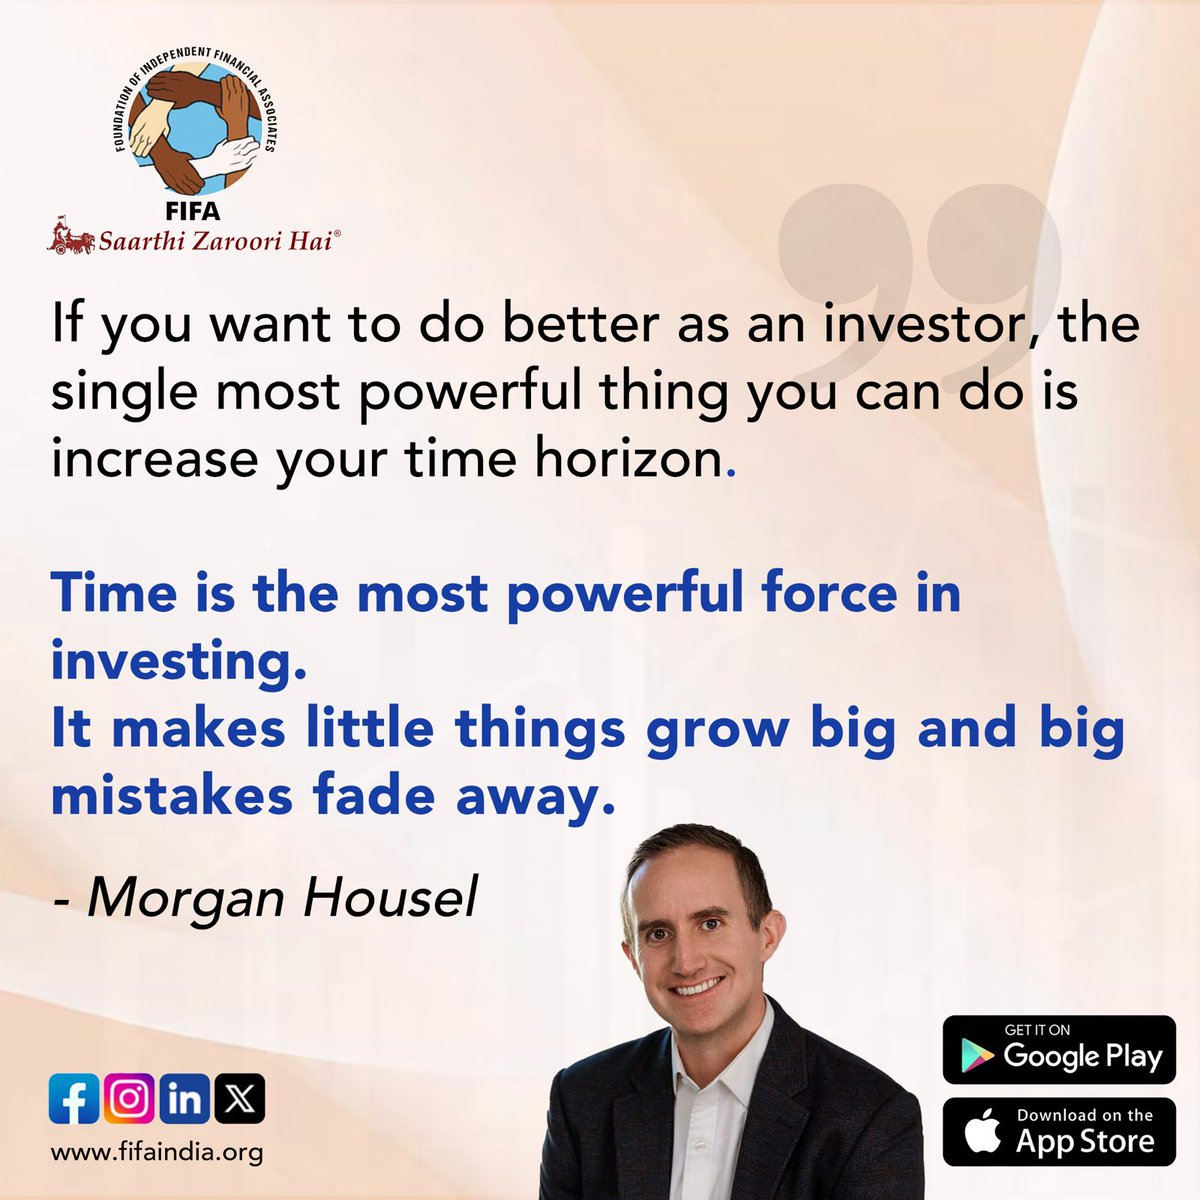 Time Horizon ⏳

#SpinWealth #mutualfunds #mutualfunddistributor #investors #single #powerful #time #horizon #grow #big #mistakes #fade